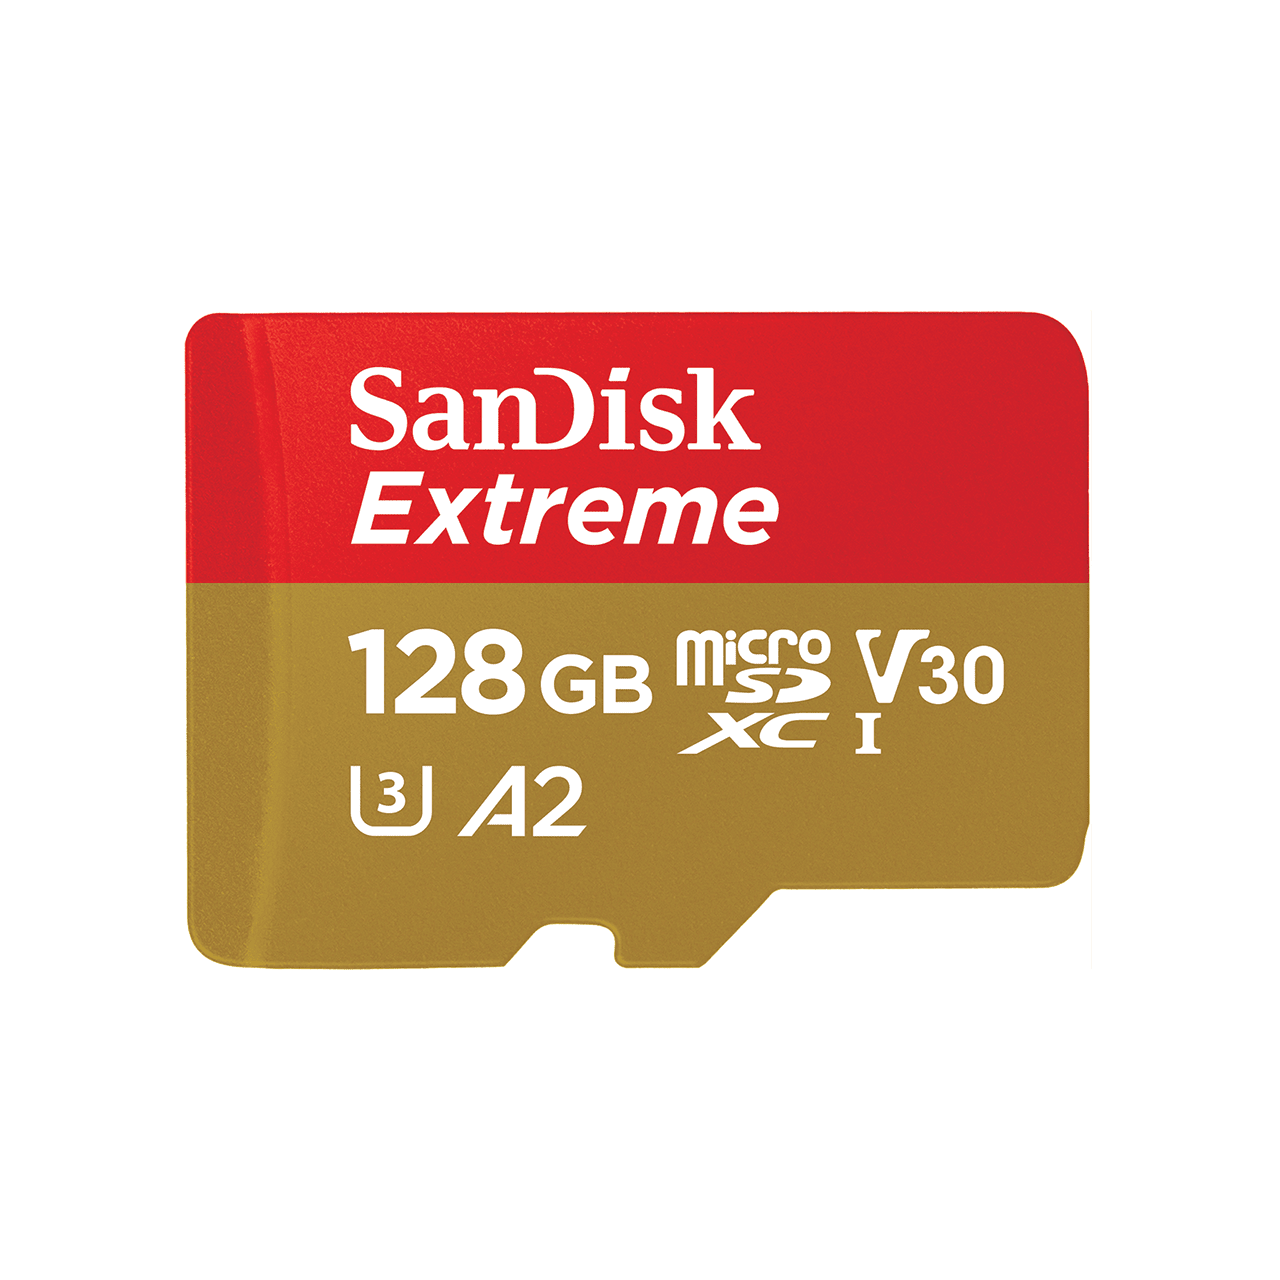 SanDisk Extreme microSD UHS-I Card - 128GB - Image3